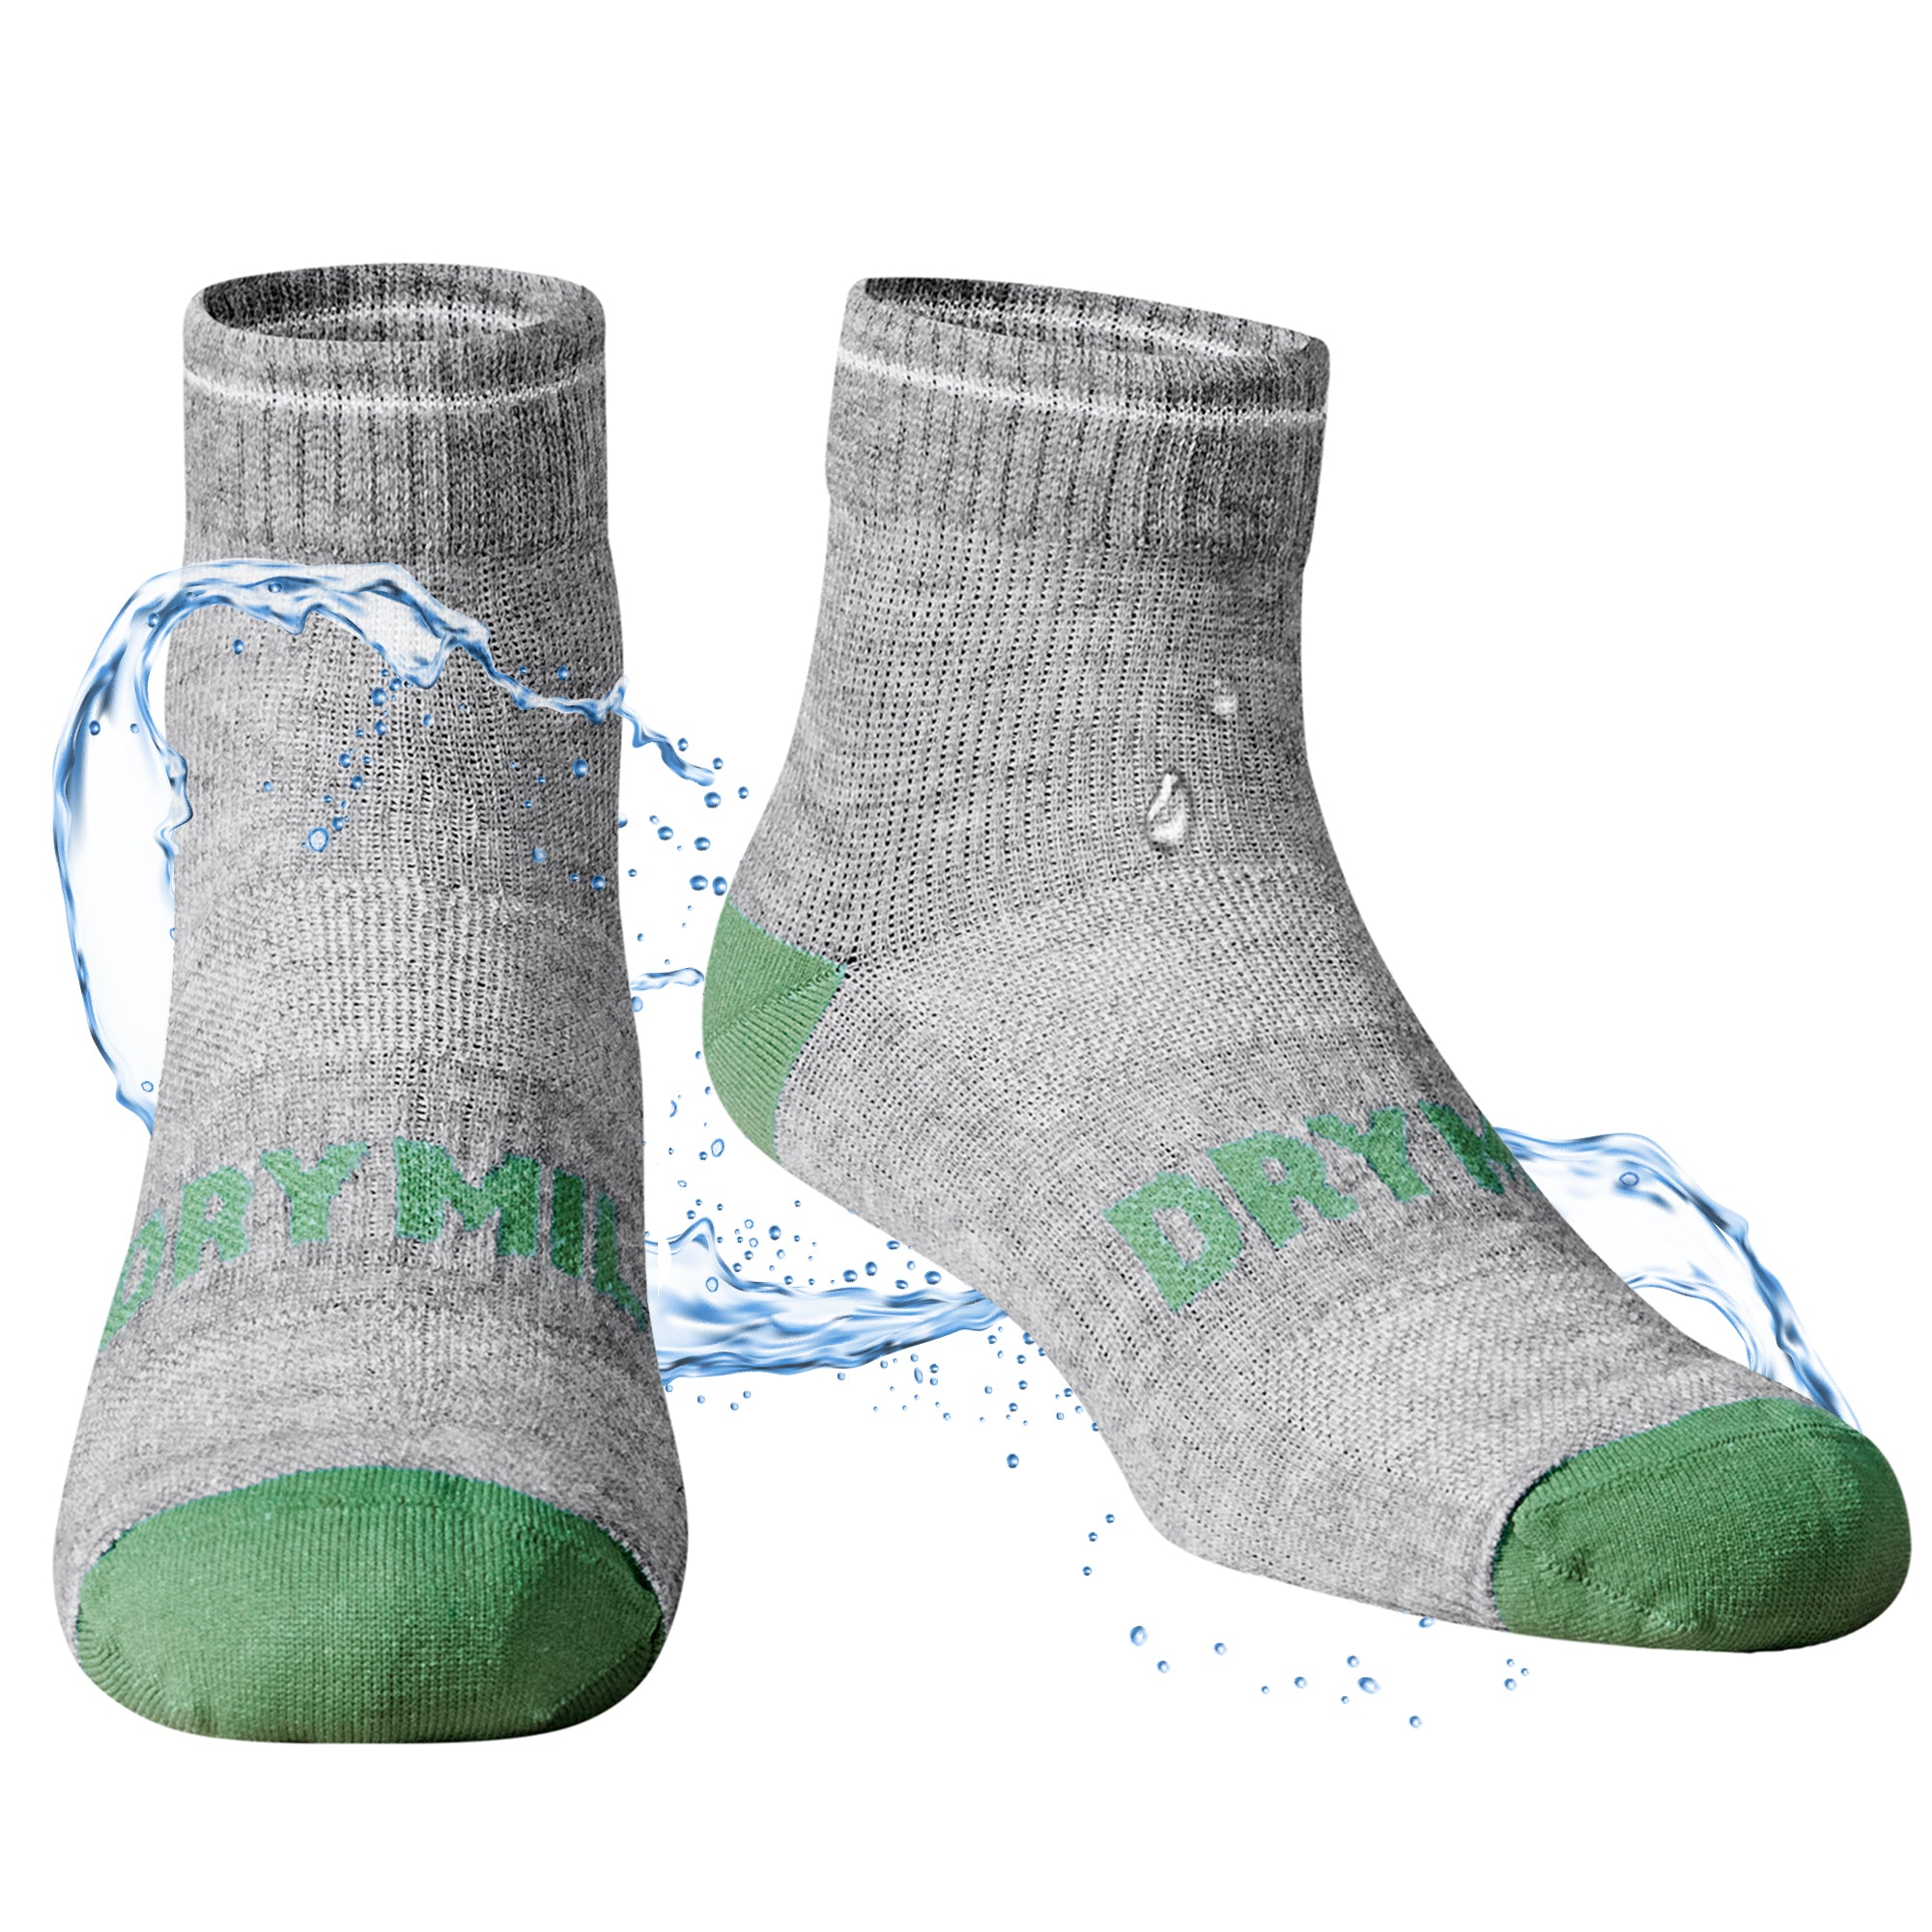 ACTIVE Waterproof Socks